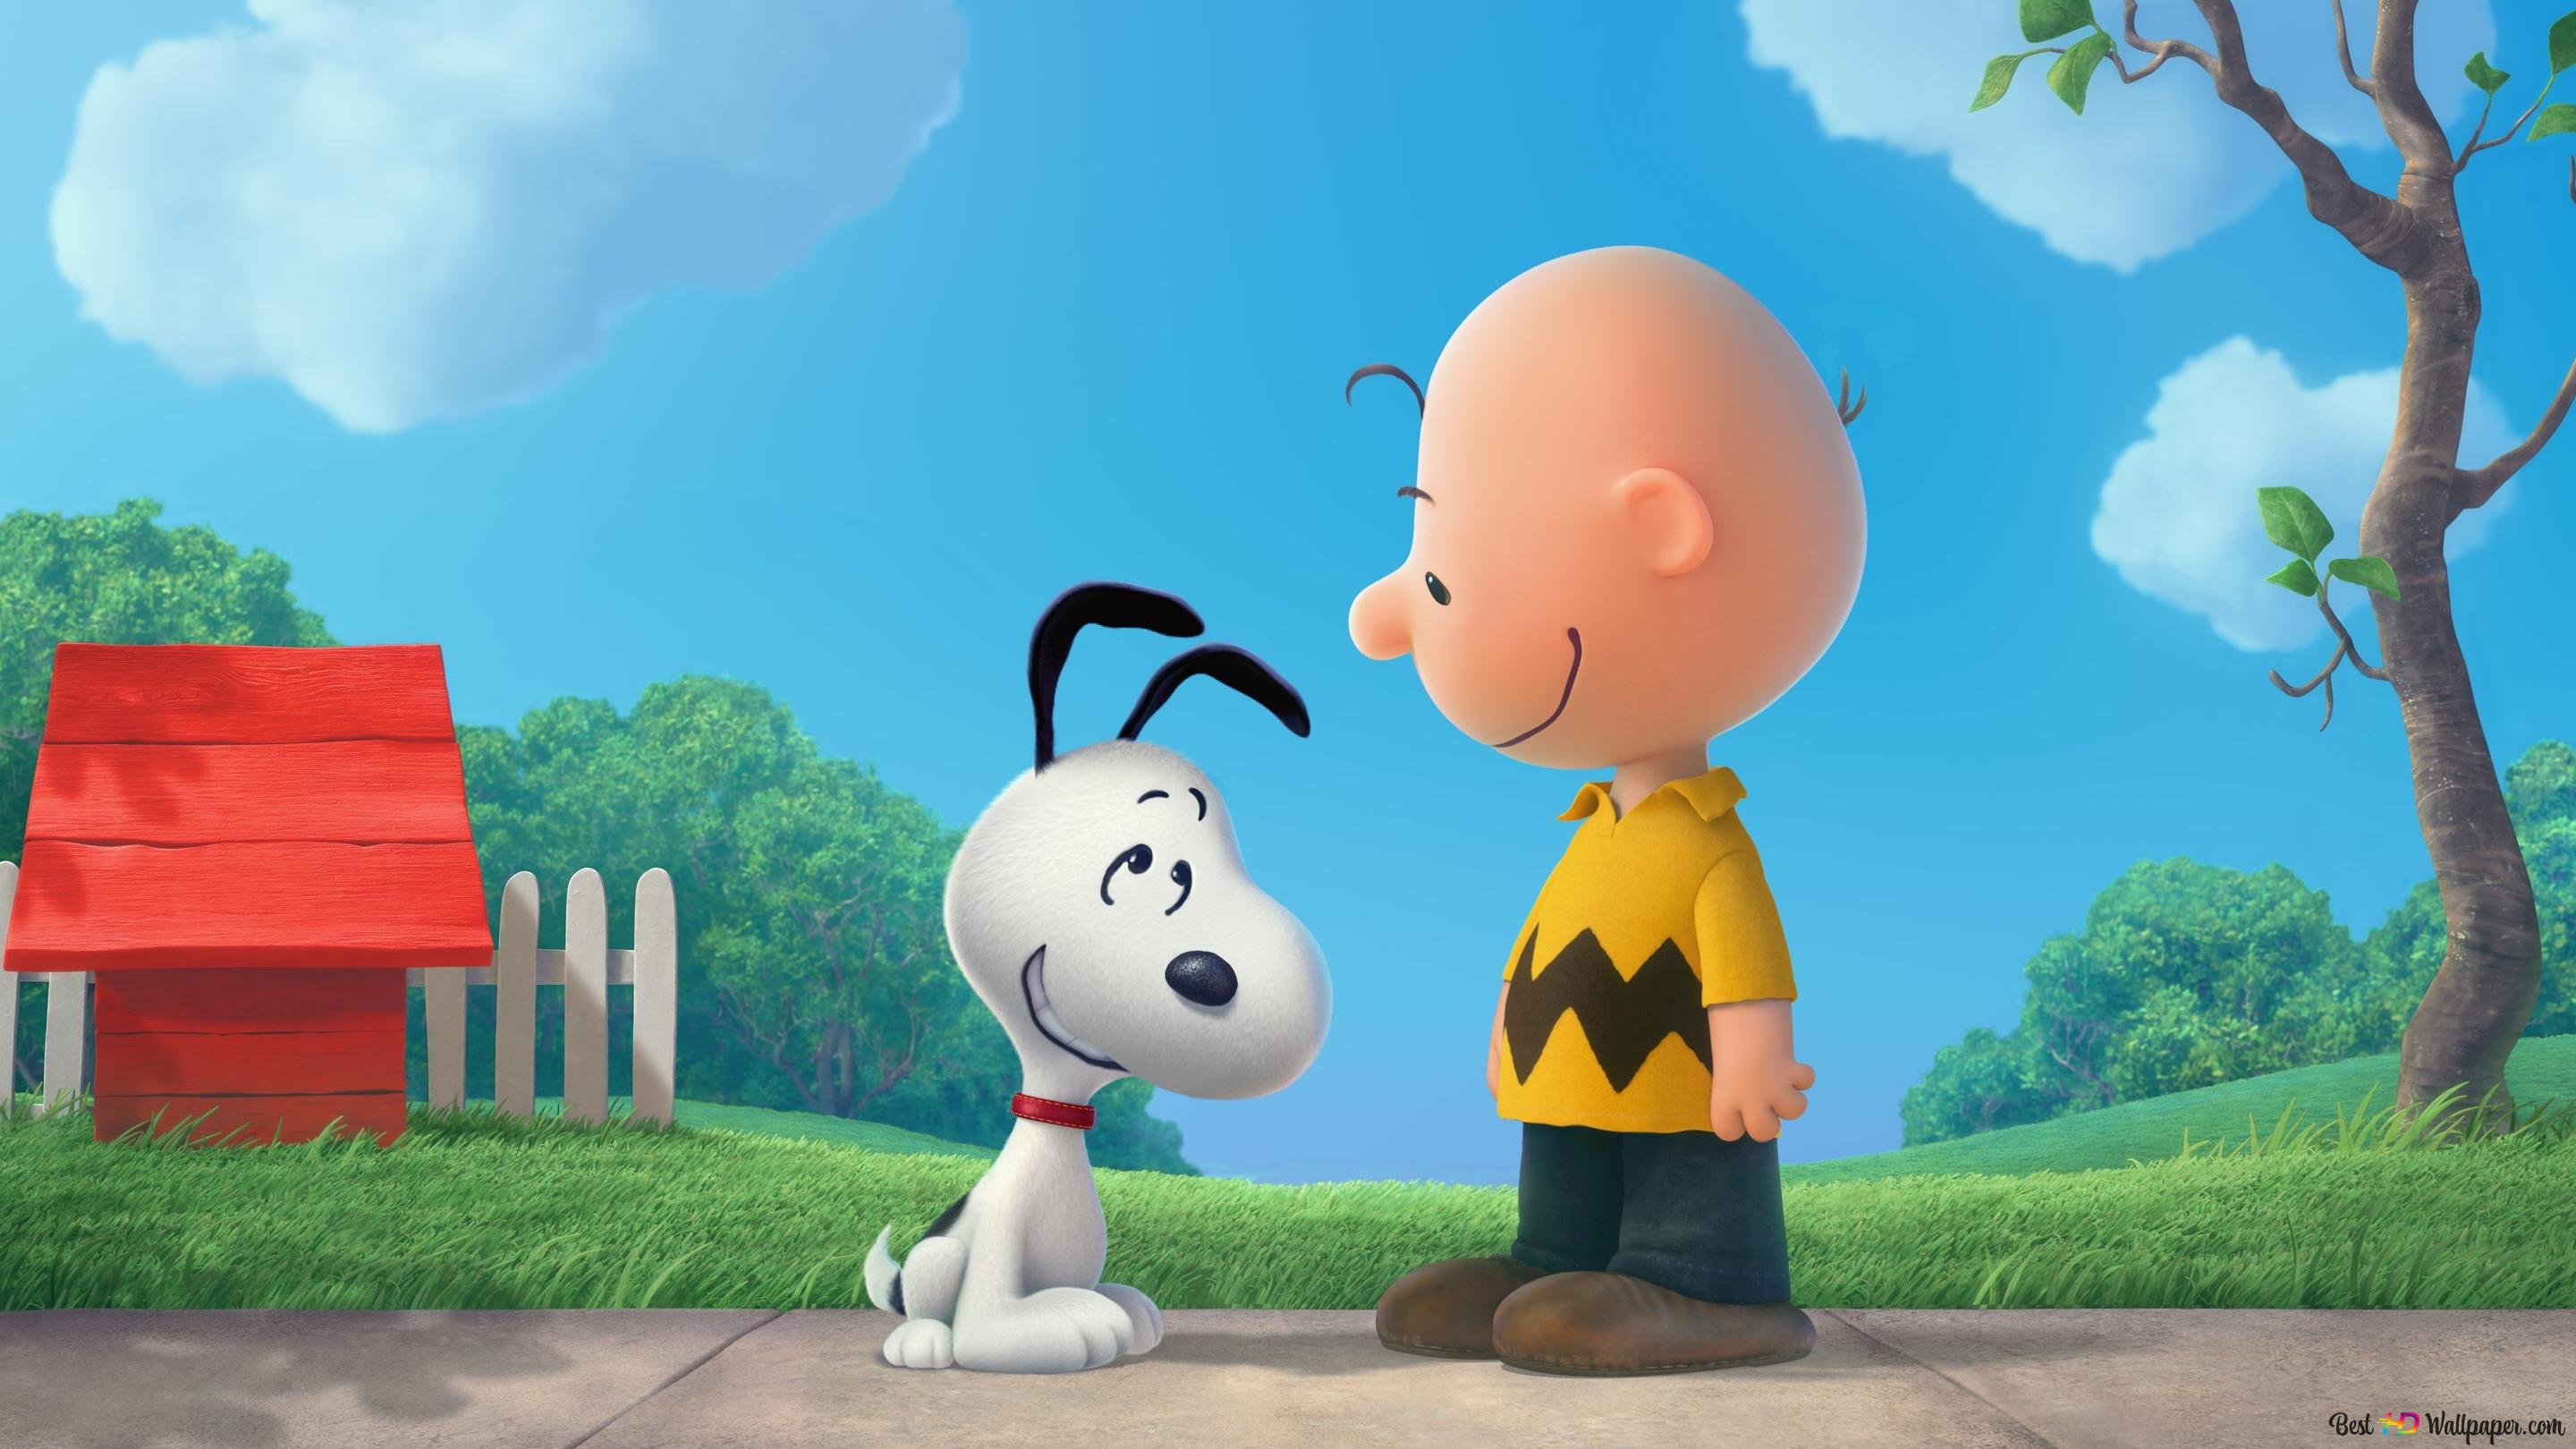 Peanuts cartoon characters Charlie Brown and his dog 4K wallpaper download